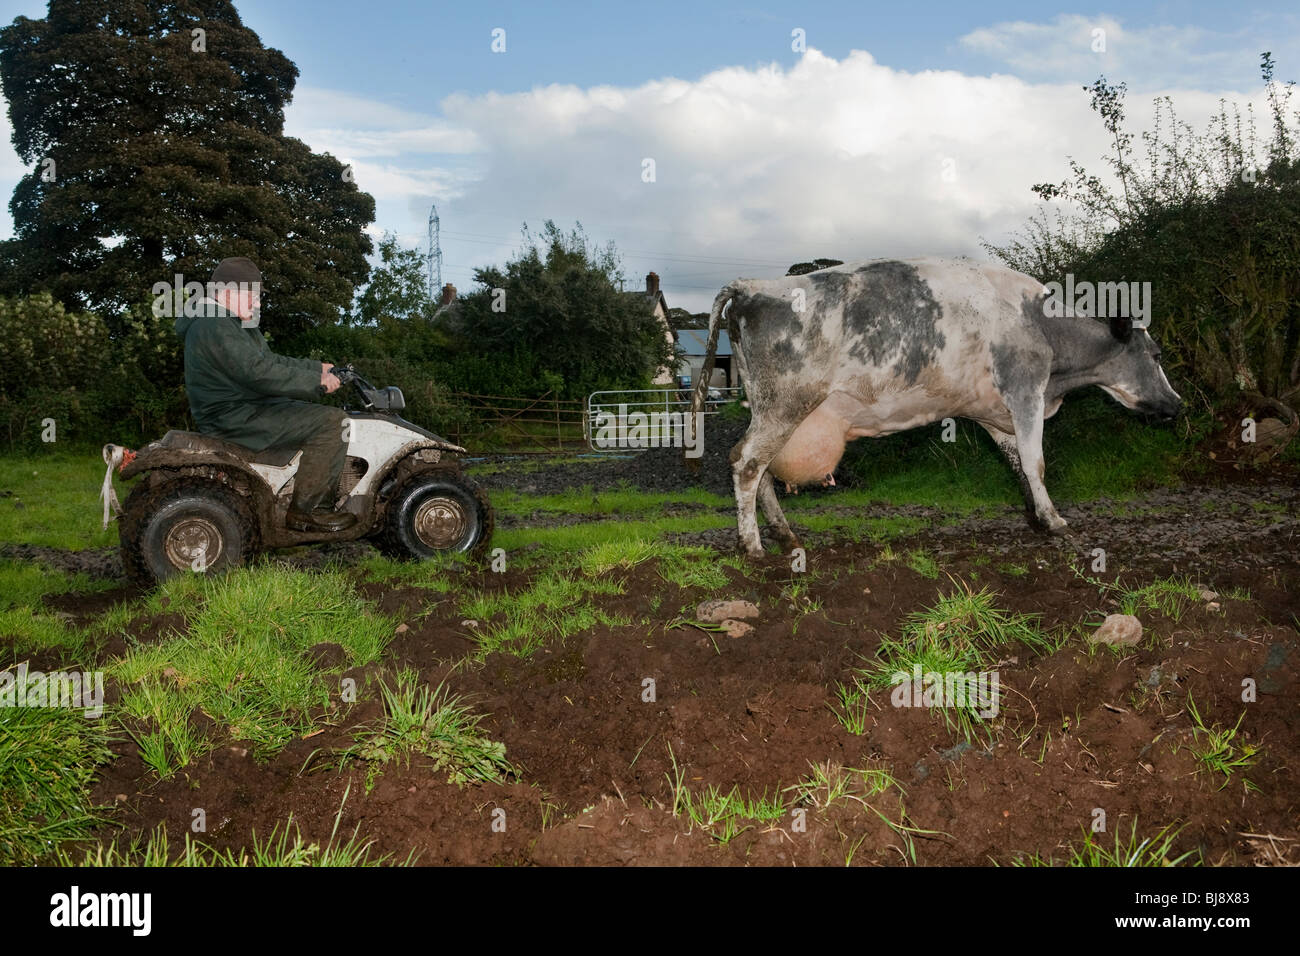 Senior farmer riding four wheeler behind a cow in a muddy field Stock Photo